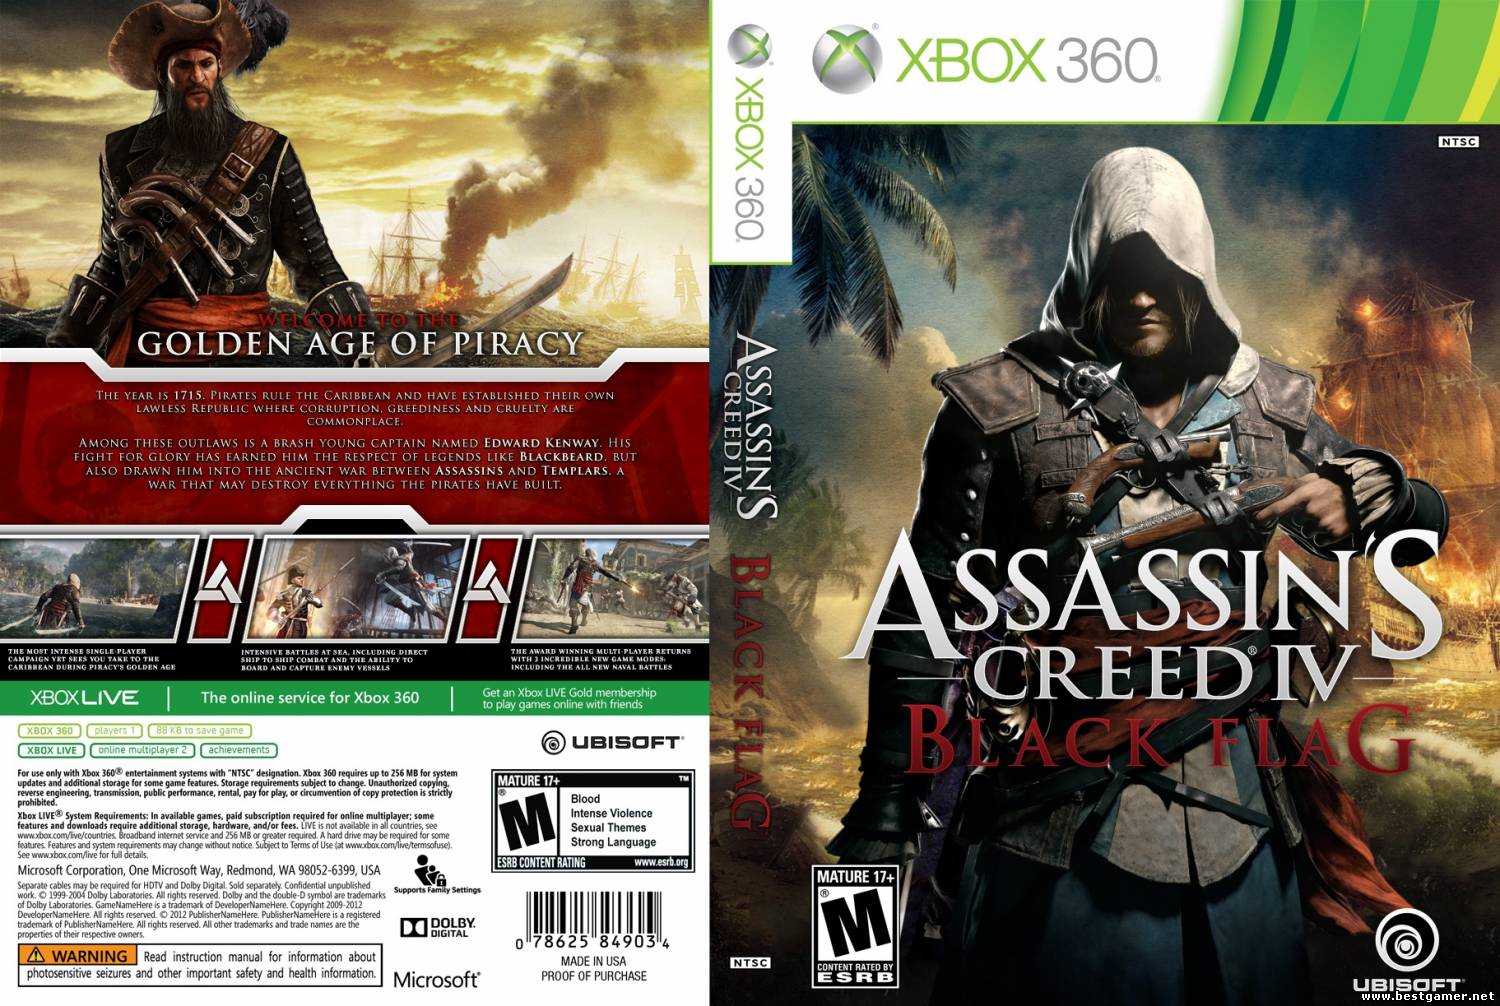 Xbox 360 игры на компьютер. Обложки игр для Xbox 360. Ассасин Крид 4 обложка хбокс 360. Assassins Creed Black Flag Xbox 360 обложка. Обложки игр ассасин Крид 4 хбокс 360.